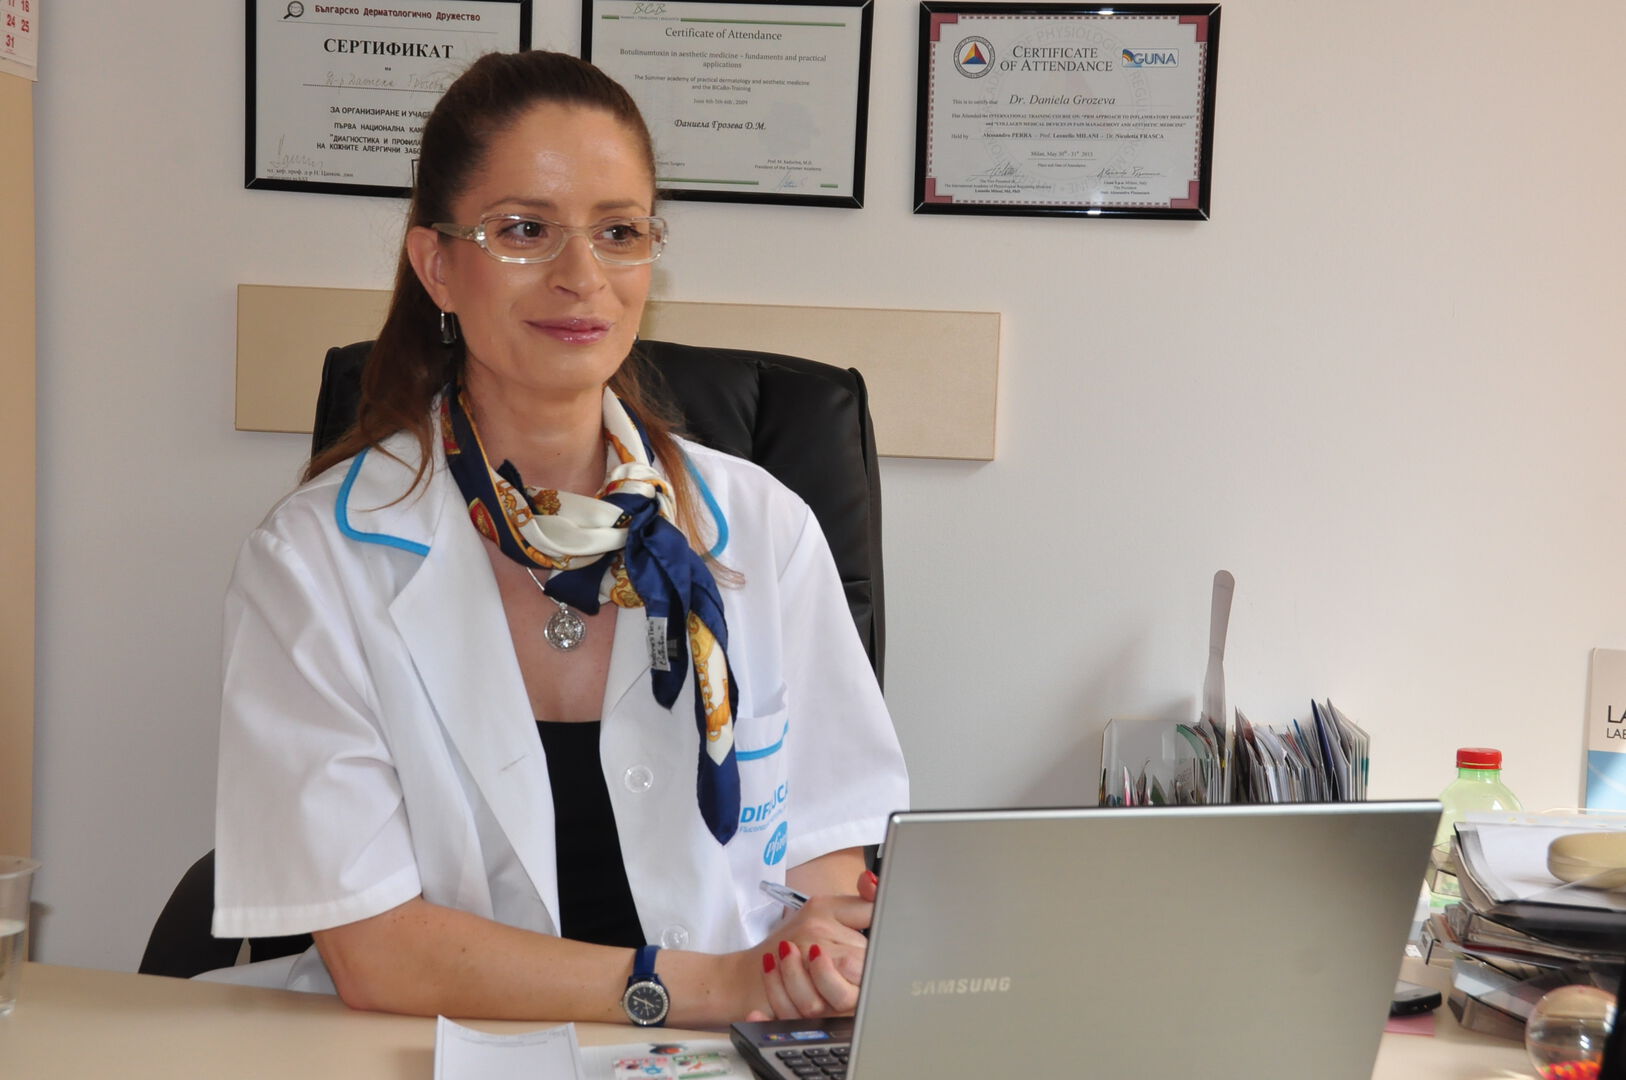 Д-р Даниела Грозева, д.м. изнесе доклад пред колеги на Втора Научна среща по повод Денят на Здравето